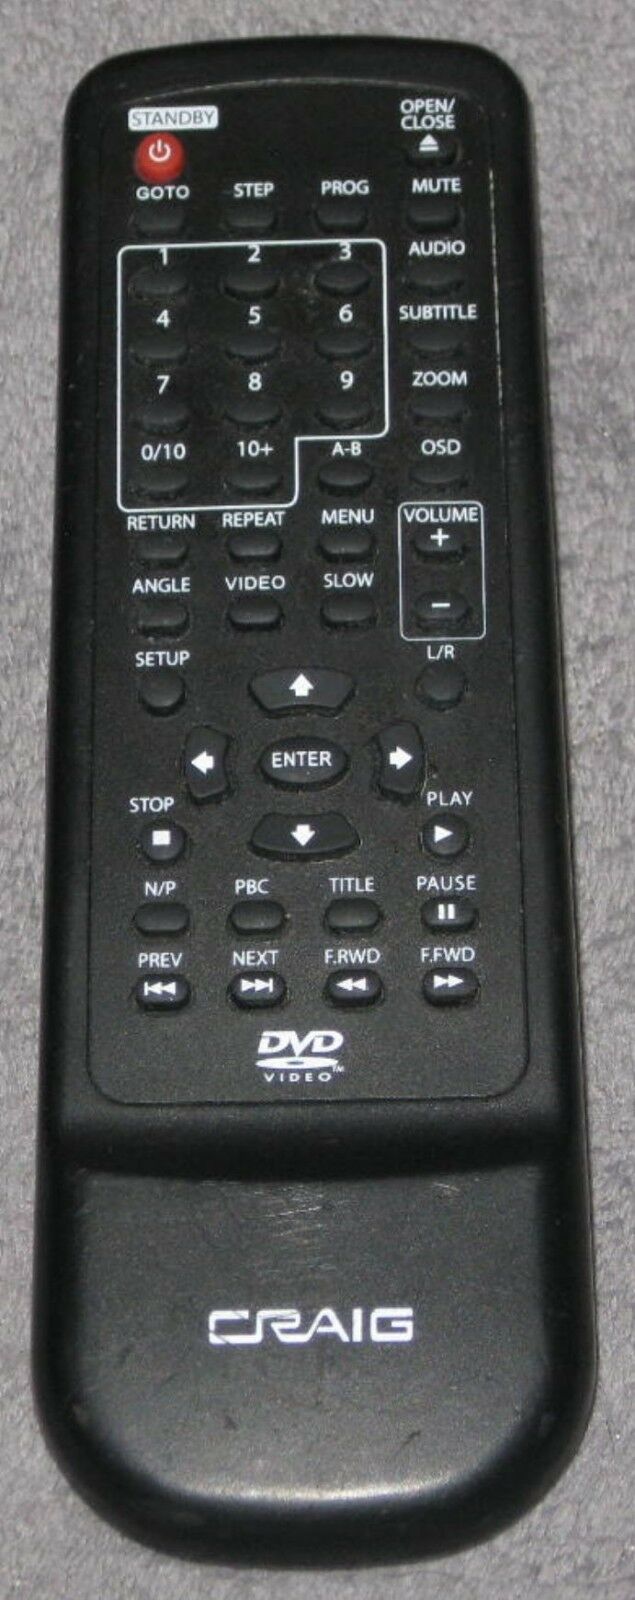 CRAIG JL-168 DVD Player Remote Control ~ Good Condition